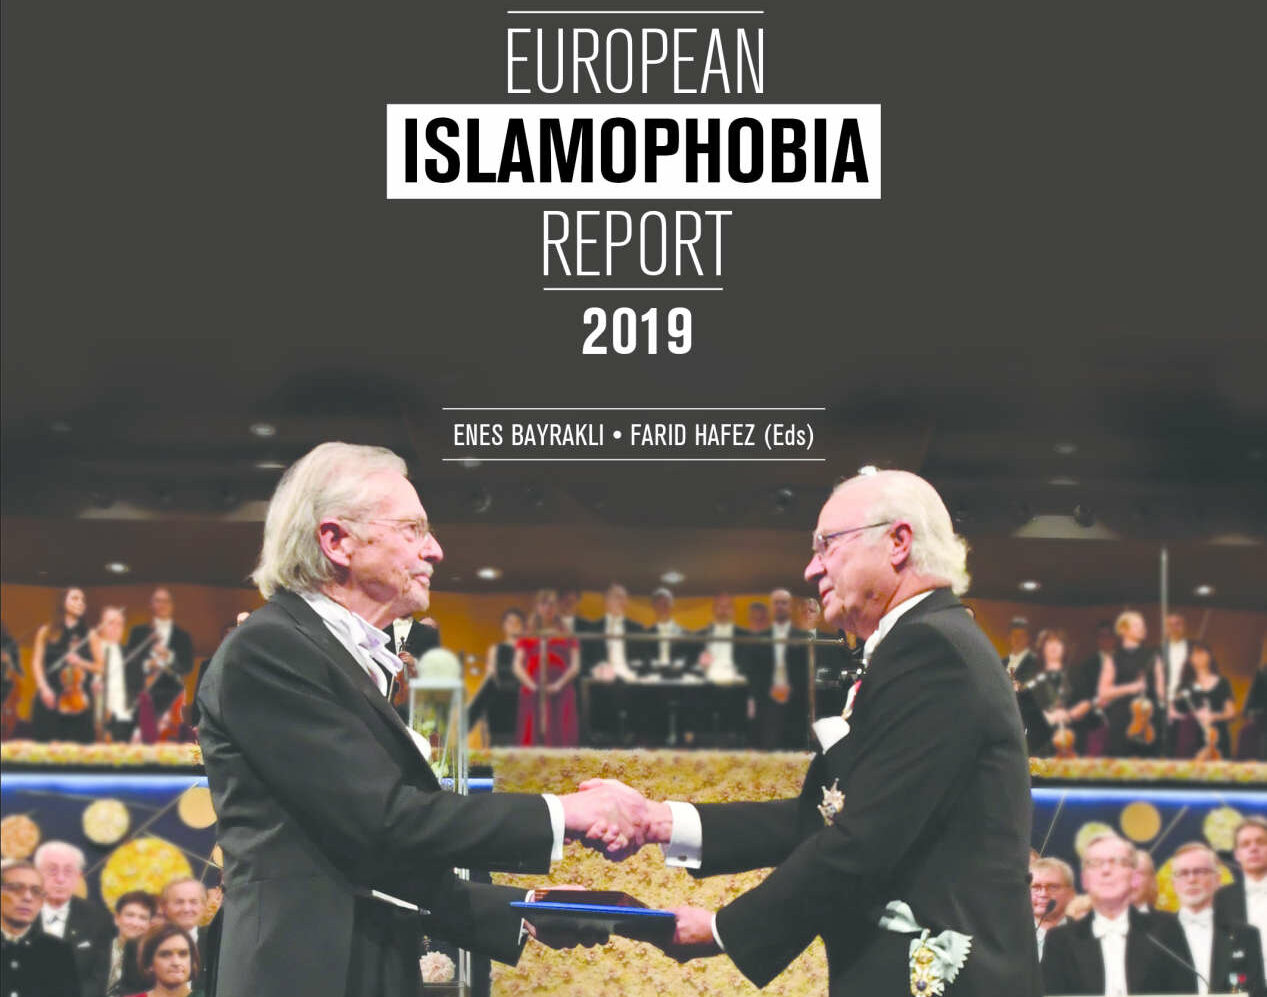 Die Nobelpreisverleihung an „Holocaustleugner“ Handke (l.) durch König Carl XVI. Gustaf ziert die Titelseite des Islamophobiereports.